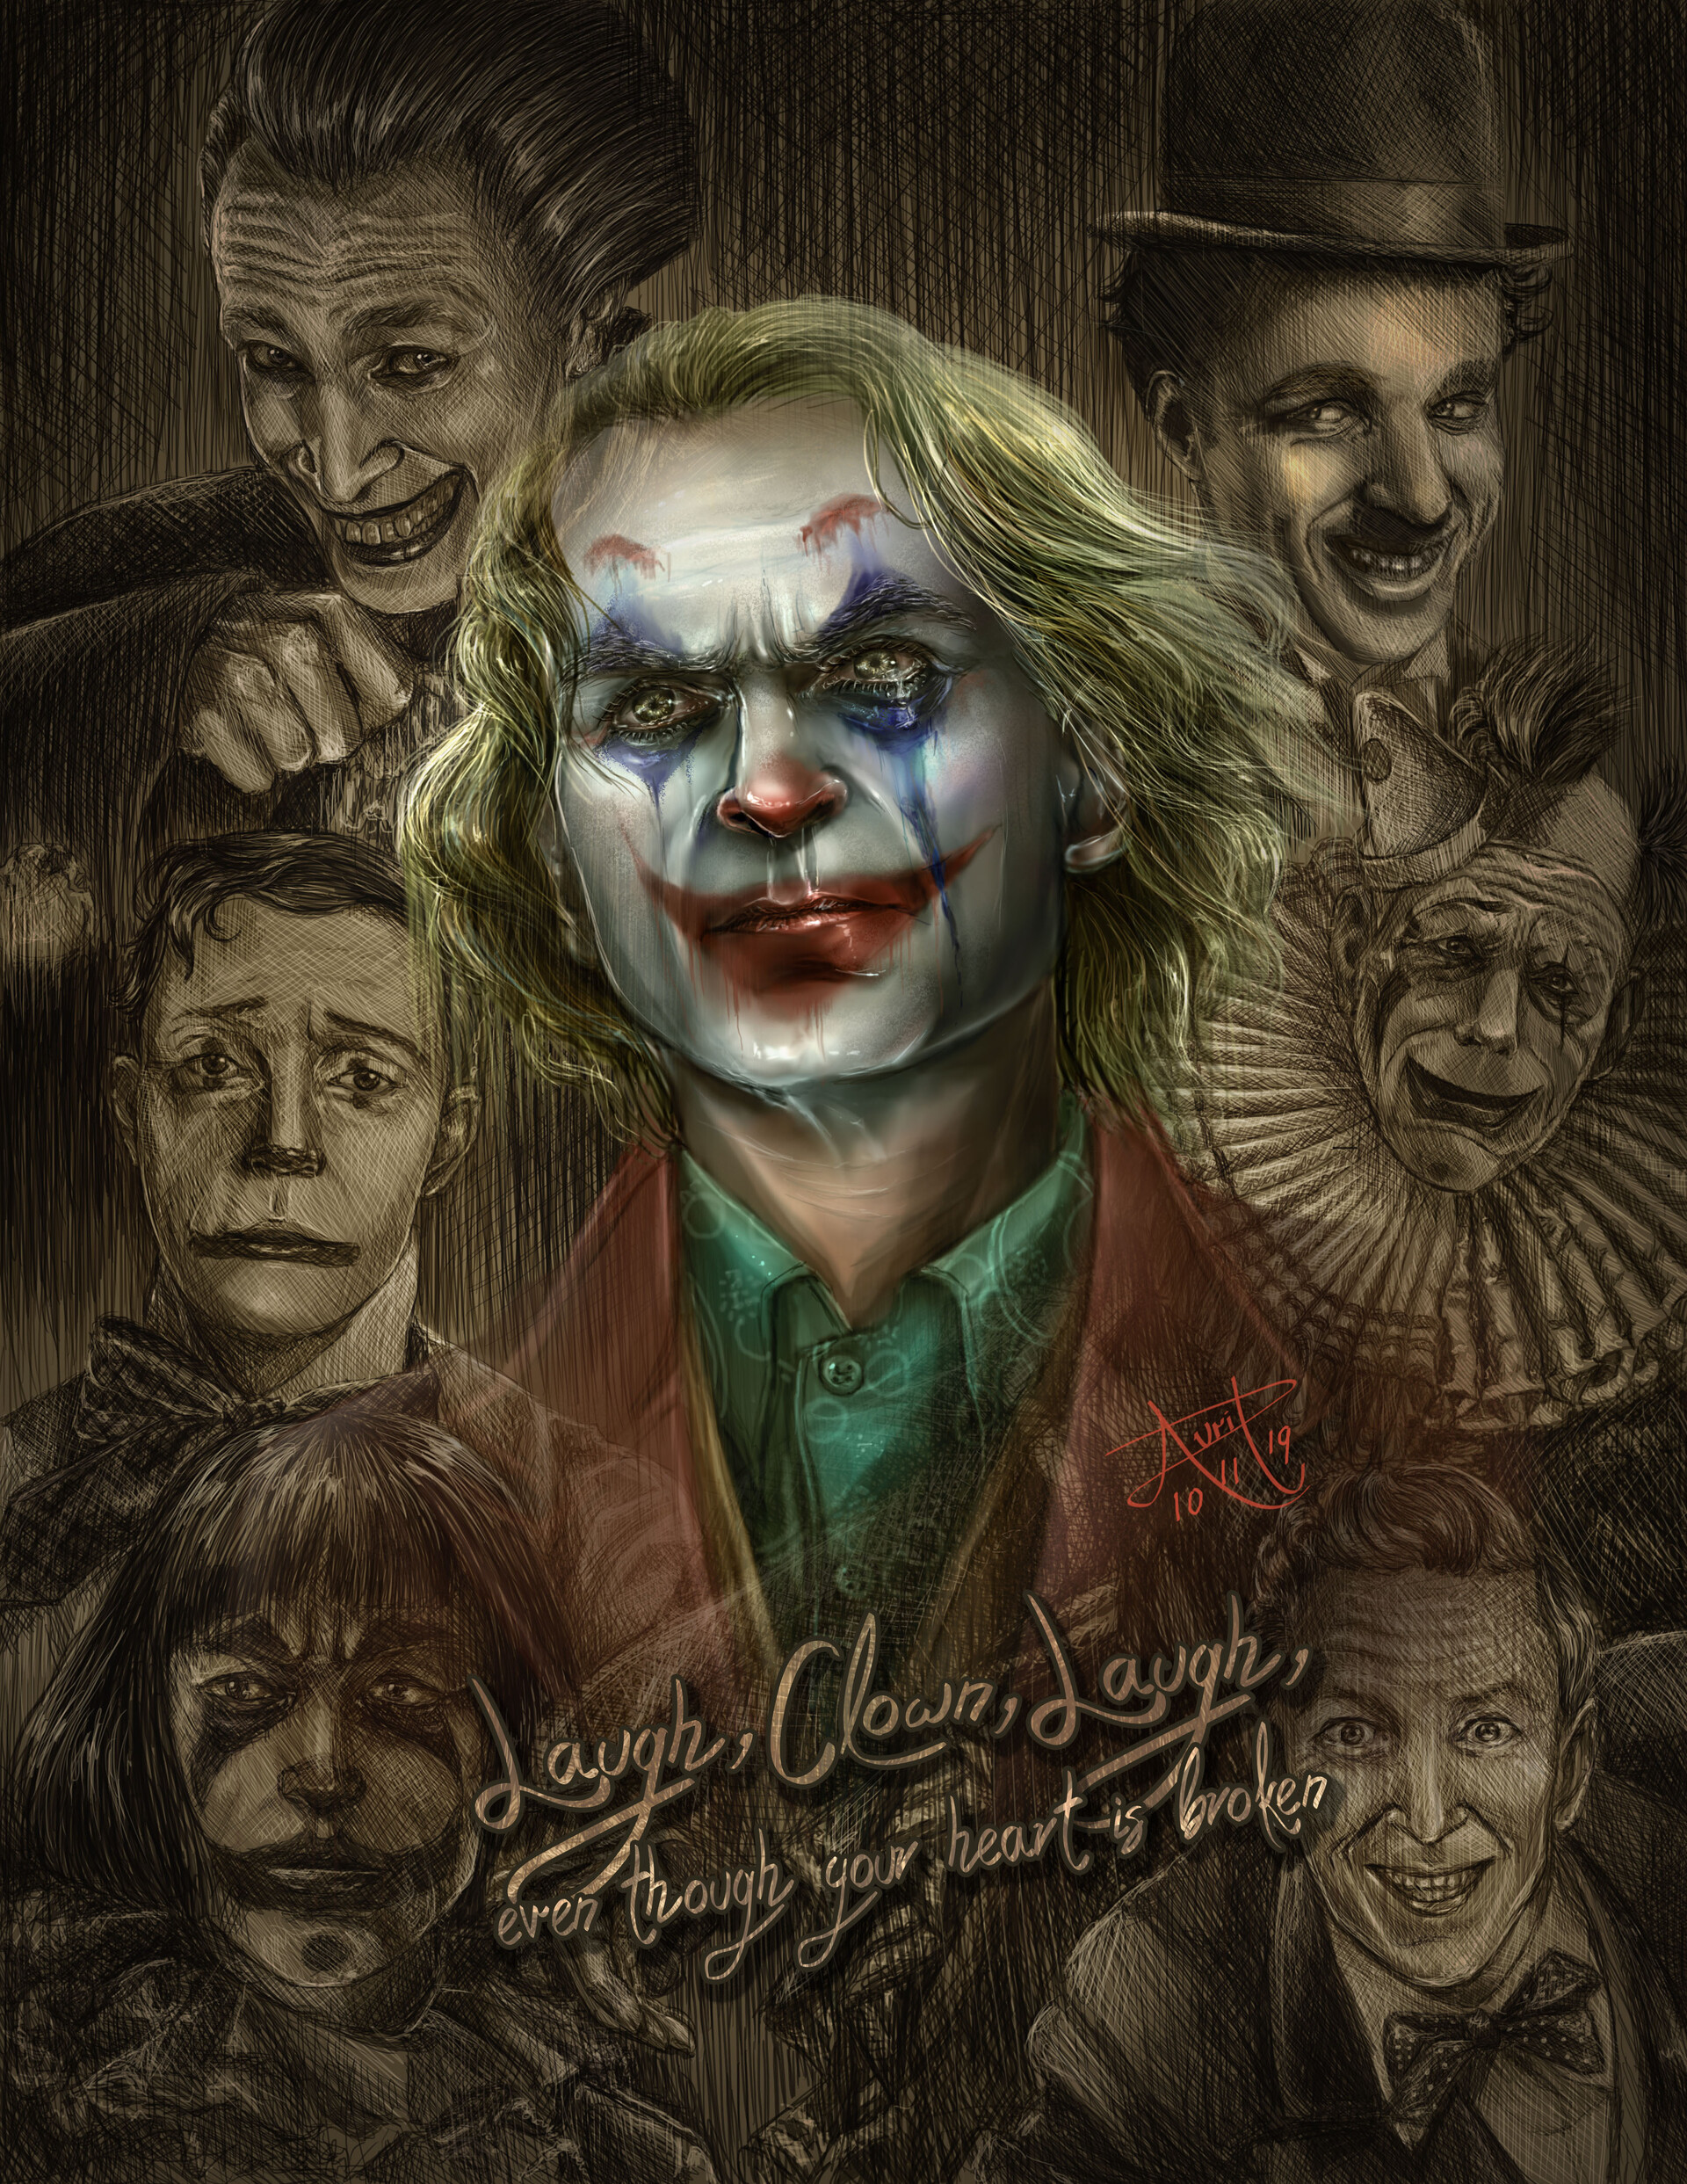 ArtStation - The Joker and classics inspiration